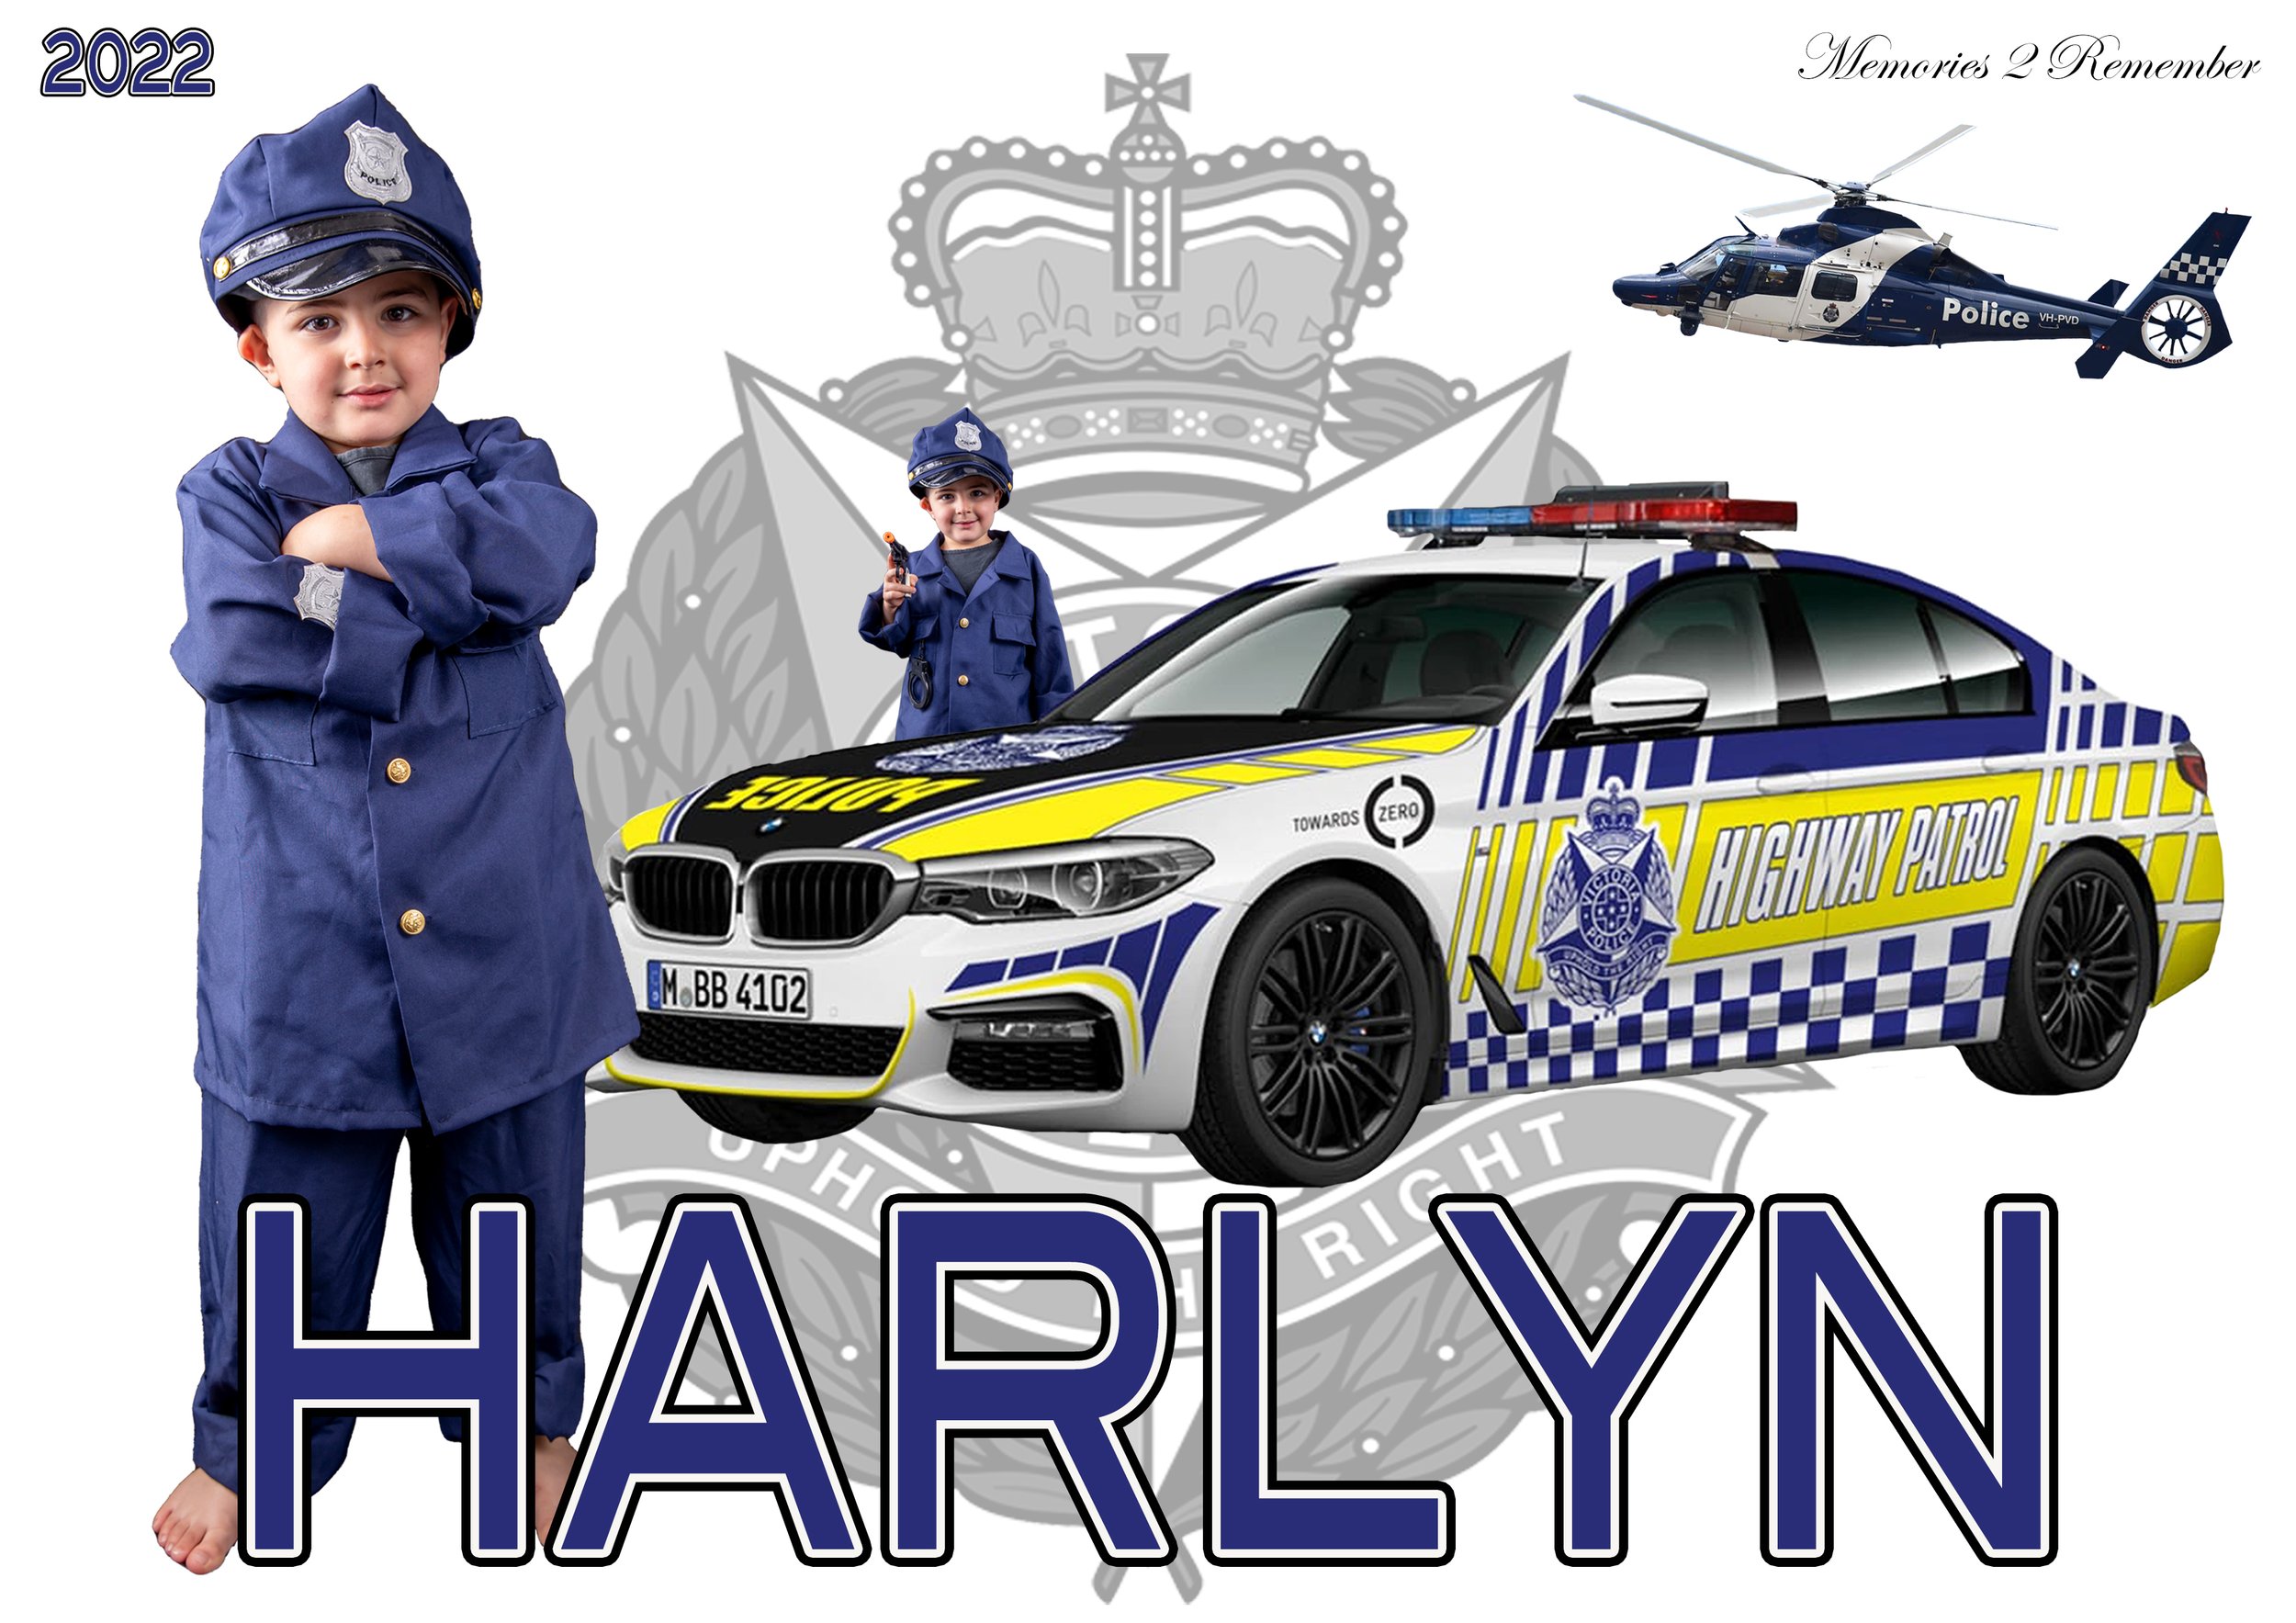 Harlyn - Policeman A4.jpg